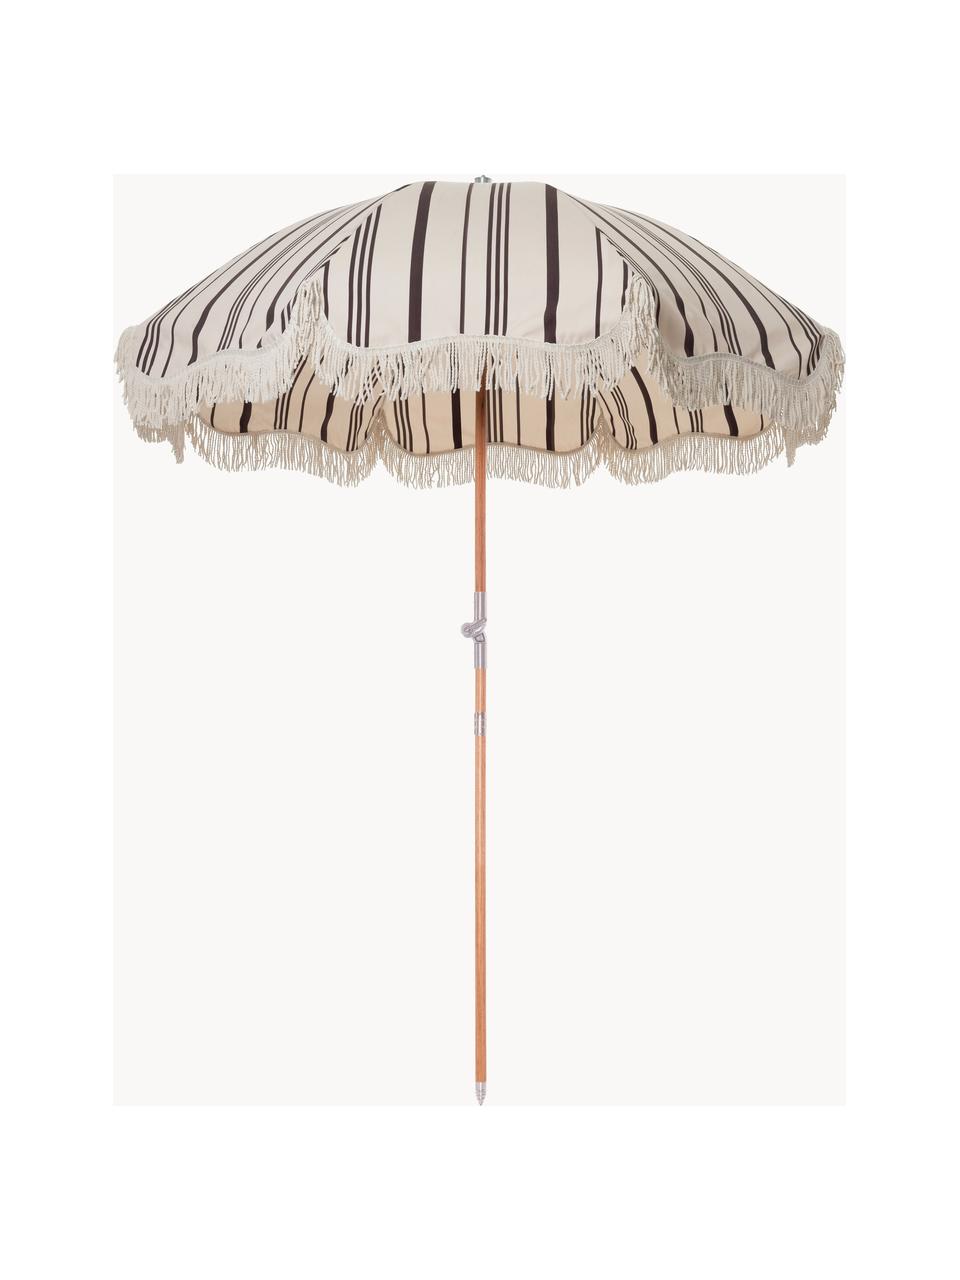 Gestreepte parasol Retro met franjes, knikbaar, Frame: gelamineerd hout, Franjes: katoen, Zwart, gebroken wit, Ø 180 x H 230 cm